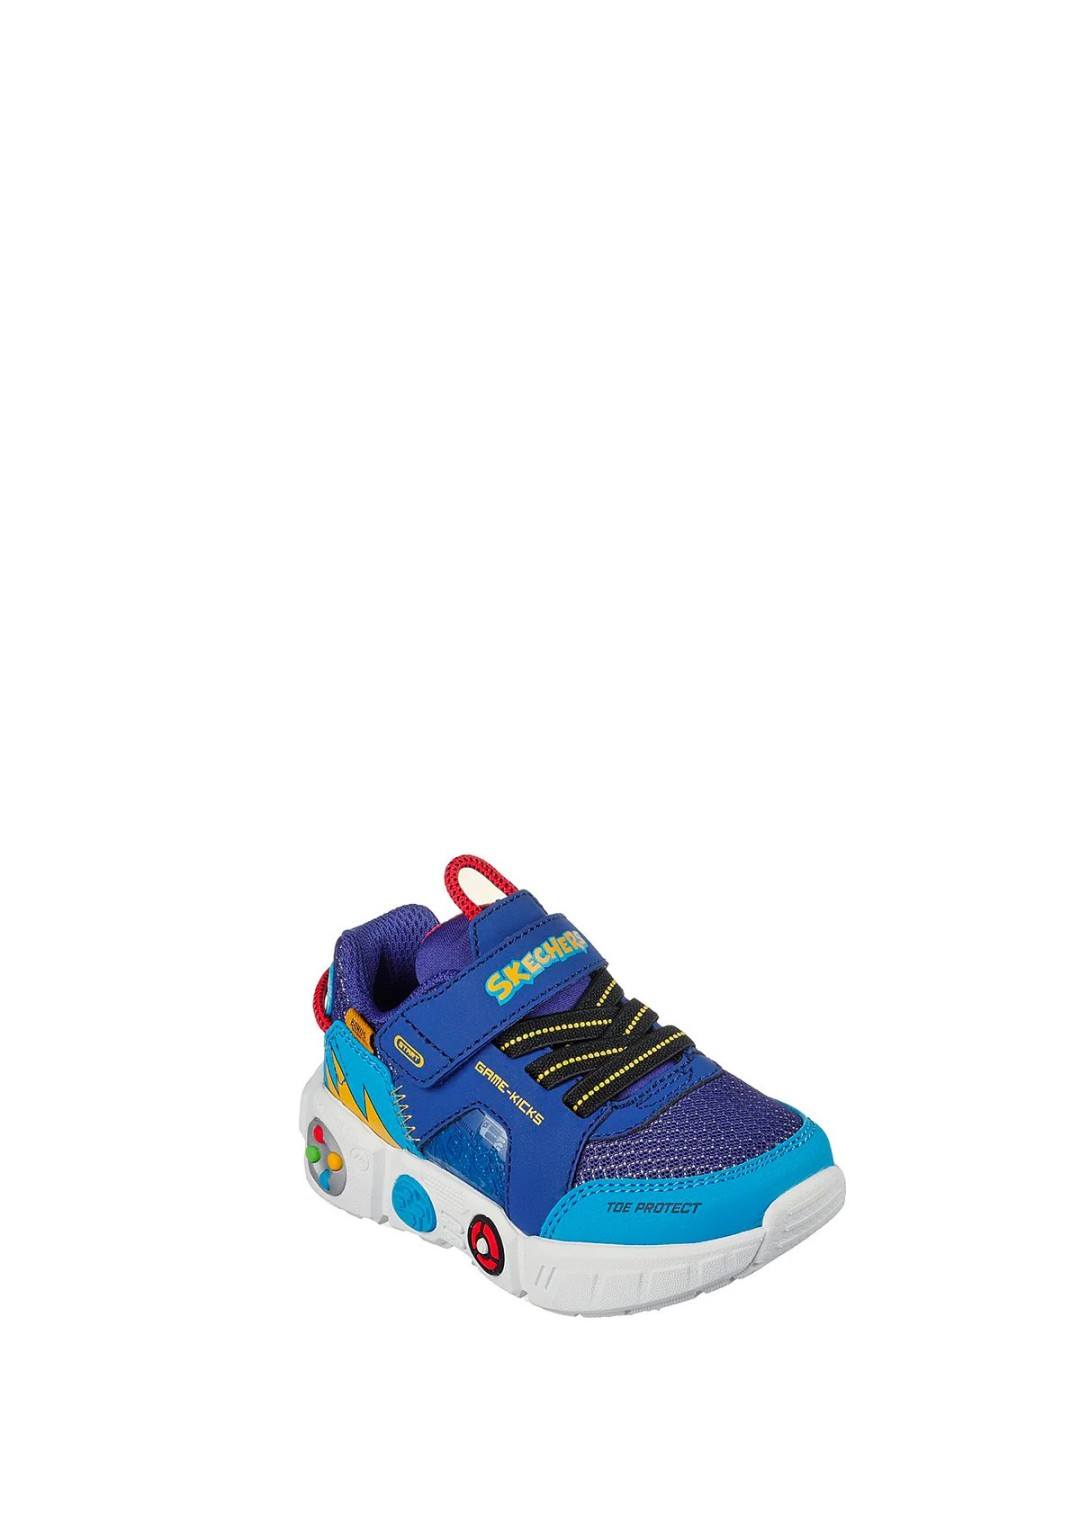 Skechers - Sneaker Game - Bambini e ragazzi - 402262N/RYMT